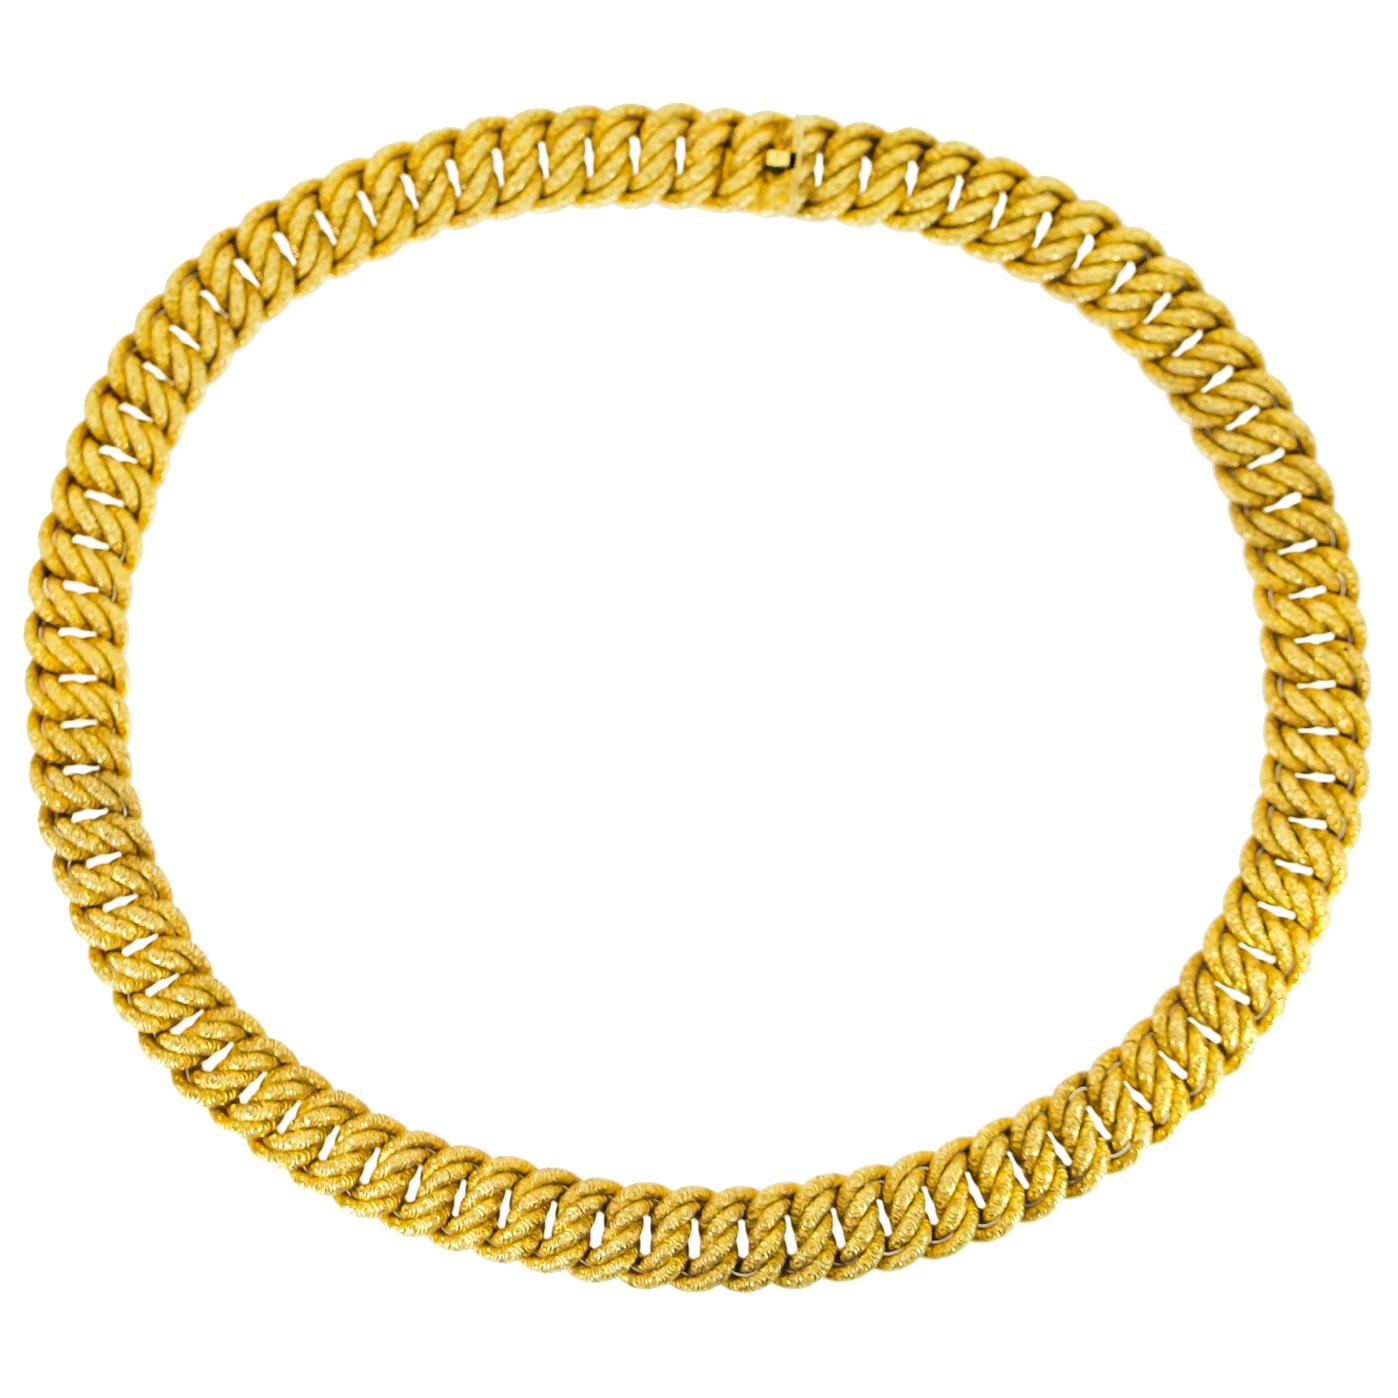 Antique European Gold Necklace